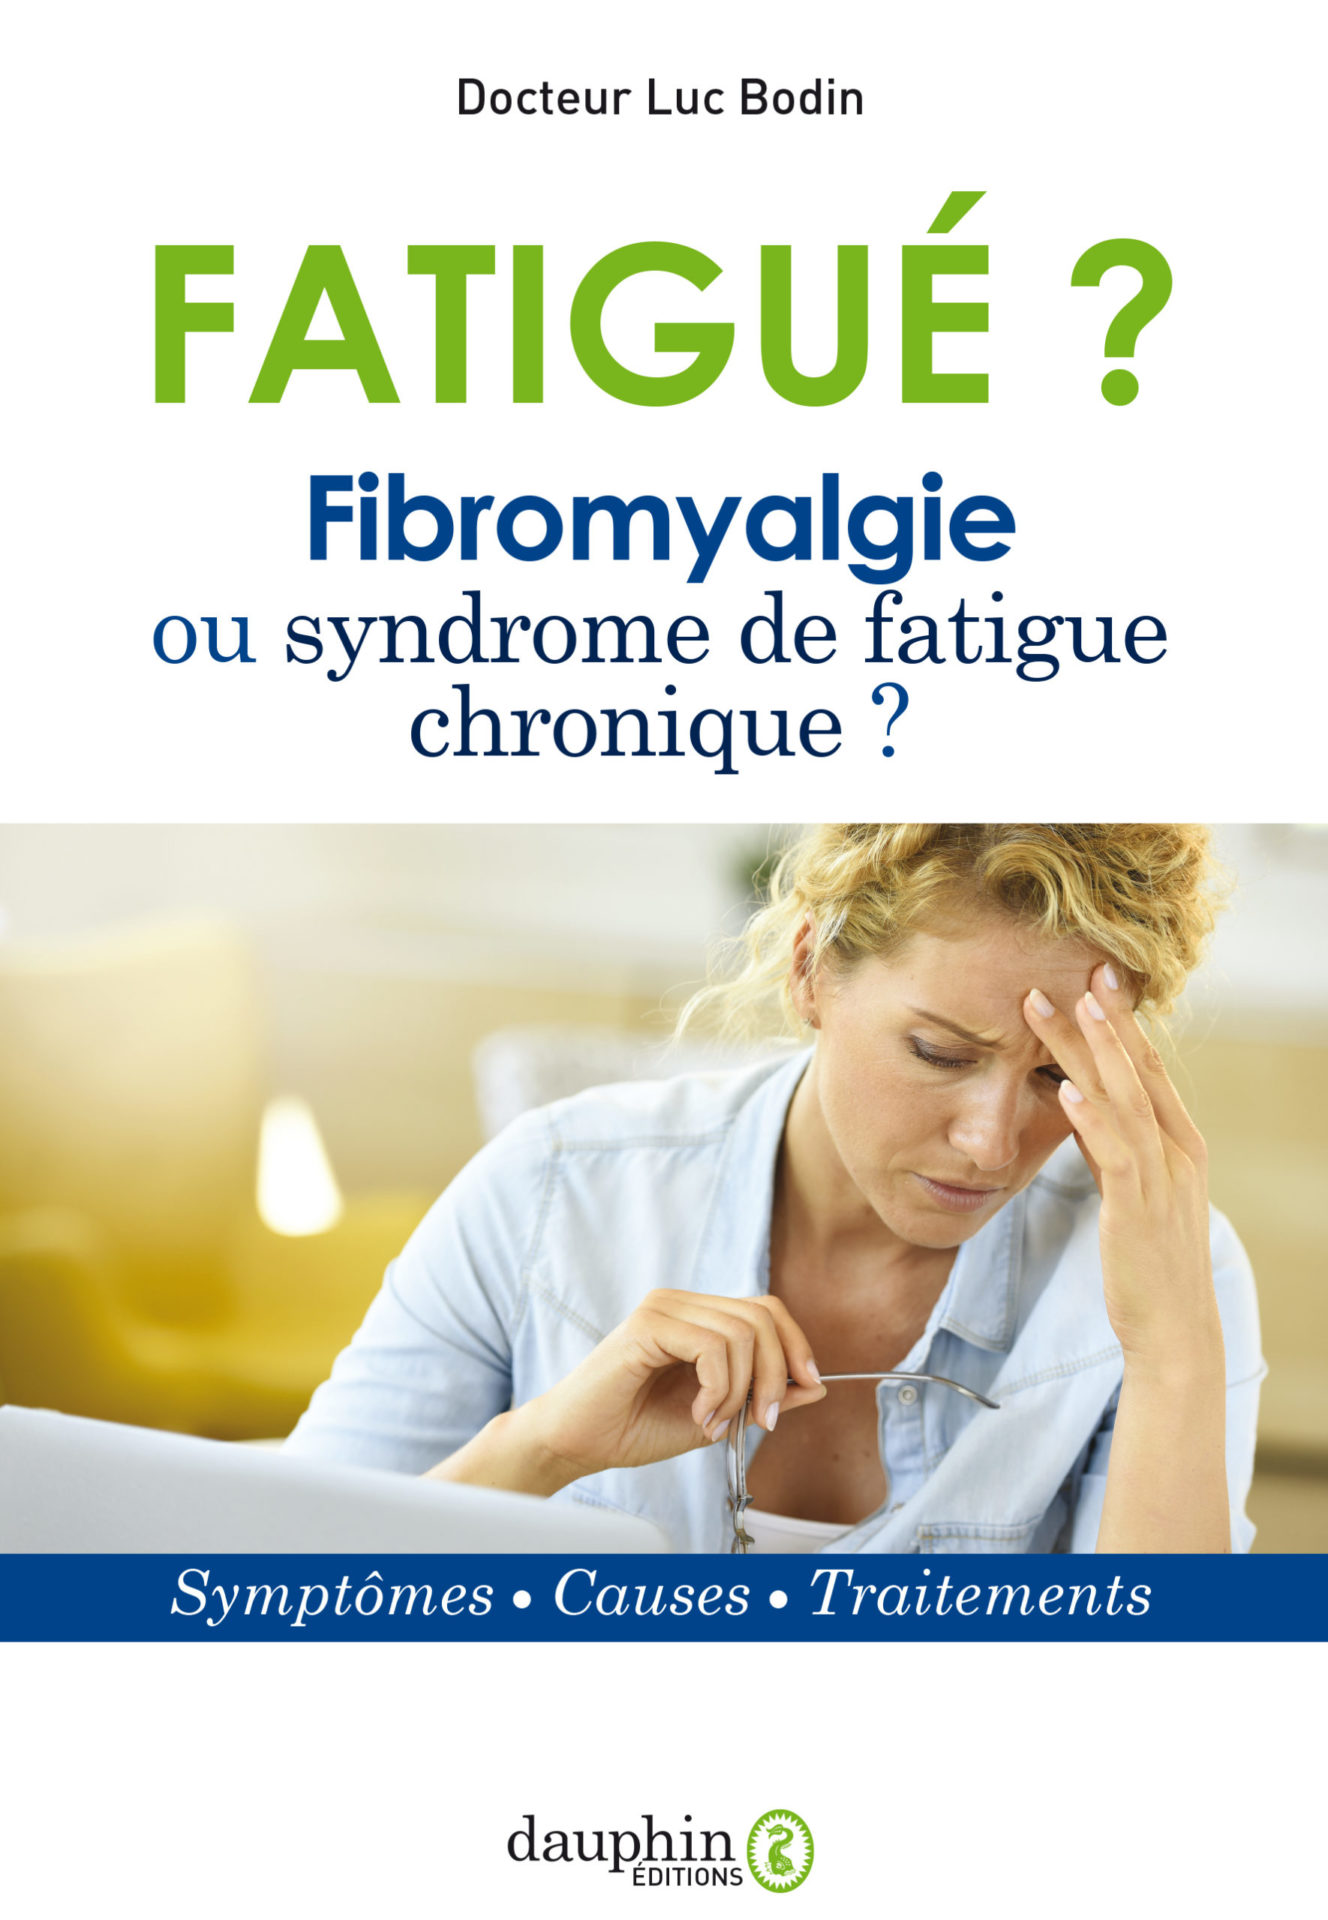 fibromyalgie-fatigue